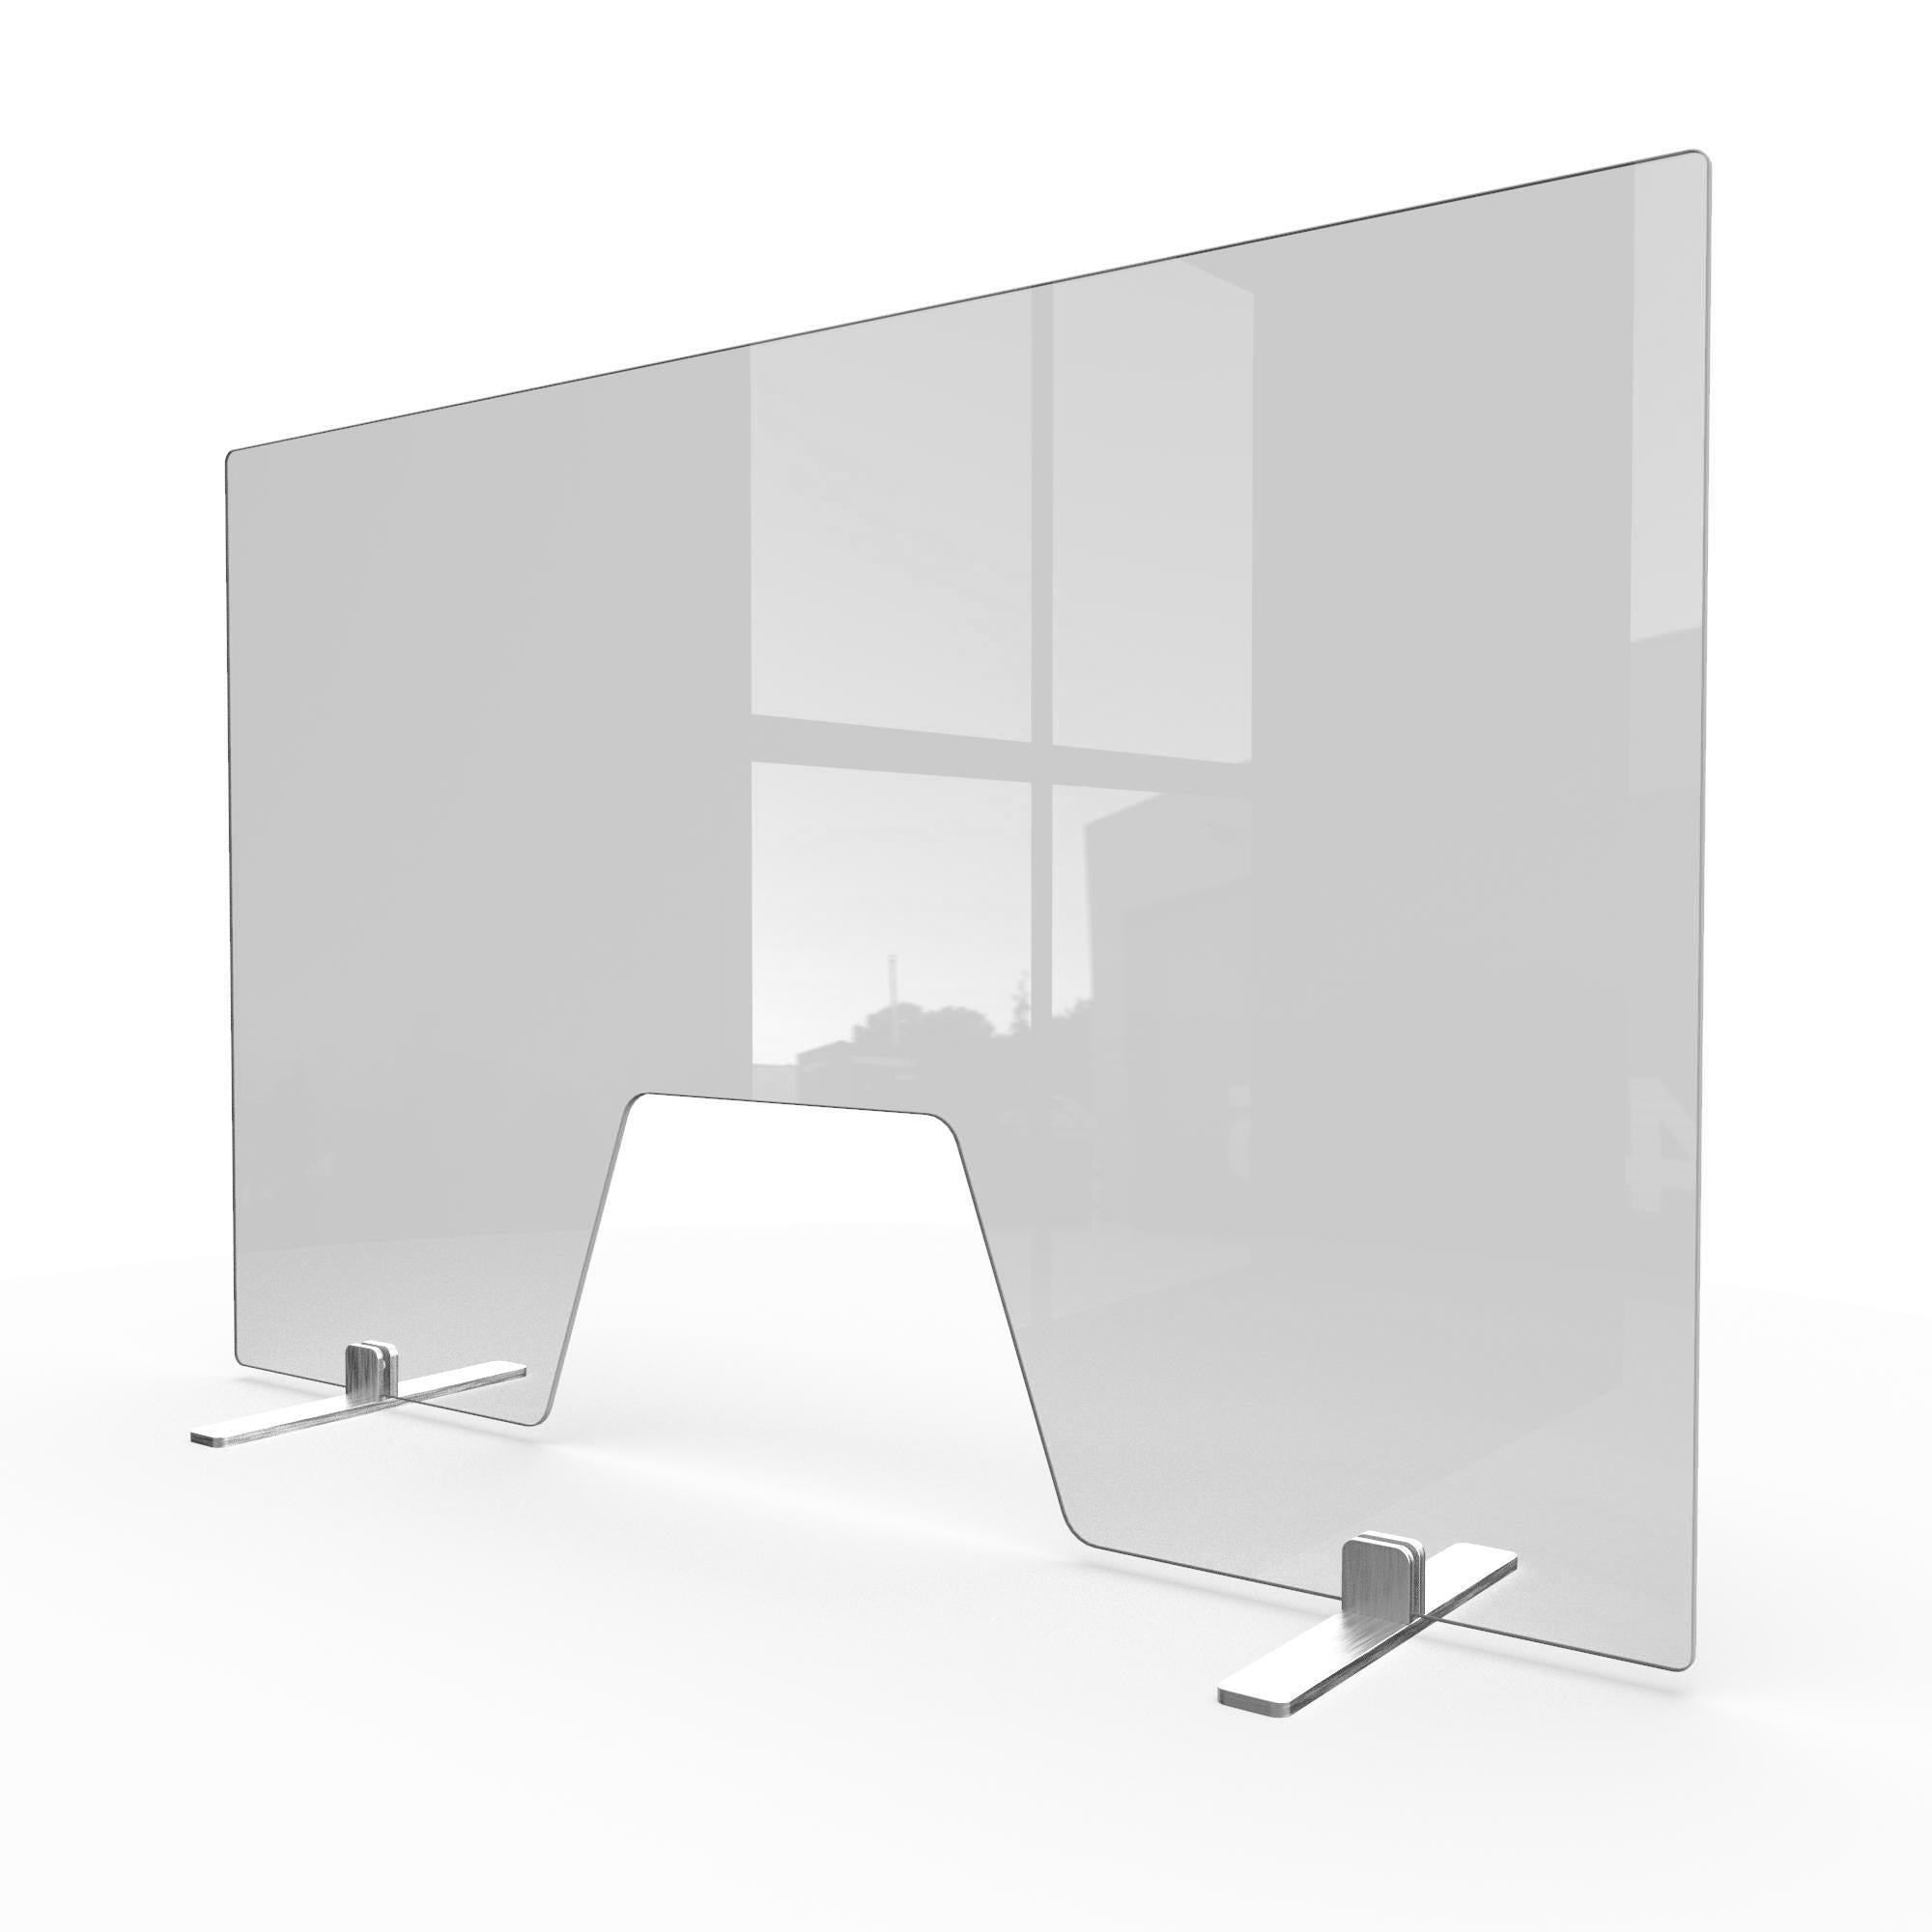 Shield Free Standing Premium Safety Glass Protective Screen | Plastock